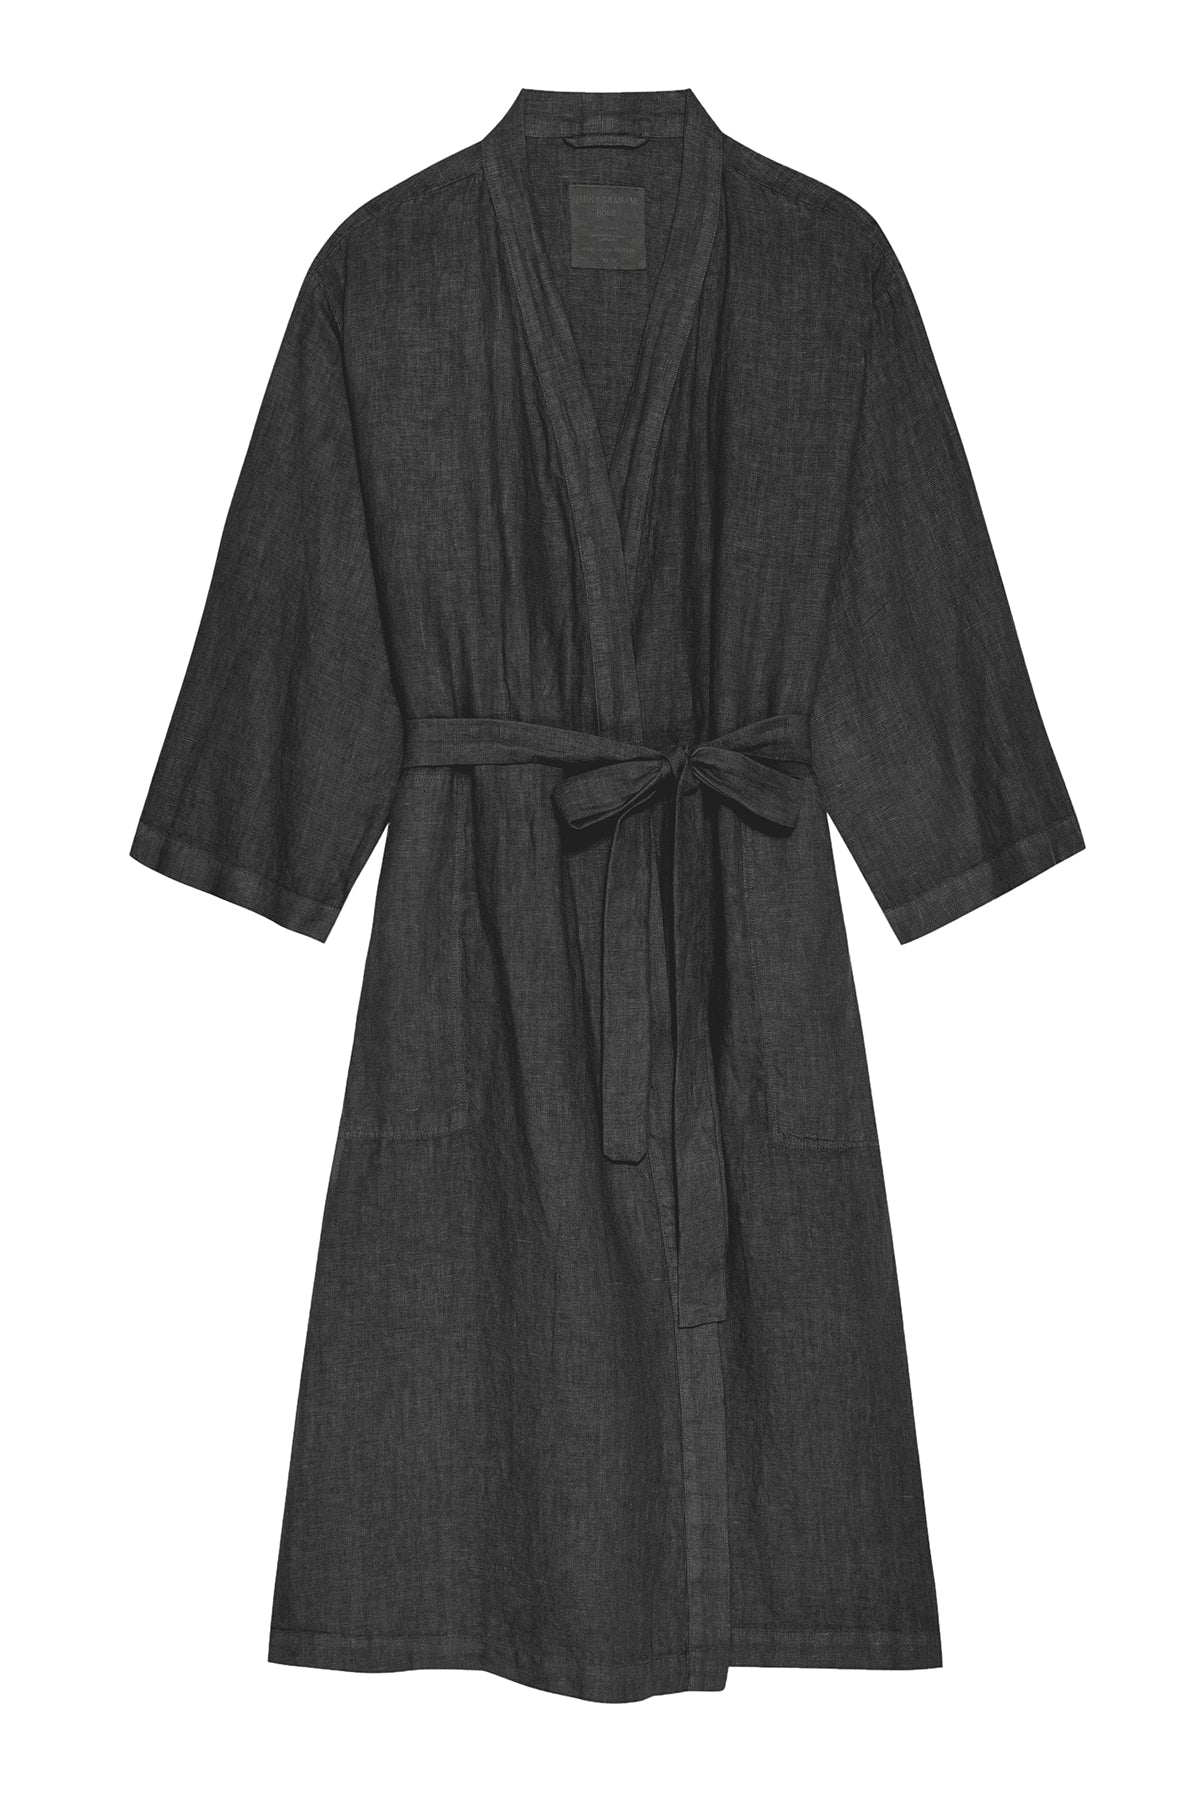 Jenny Graham Linen Robe in black flat shot-26310943441089